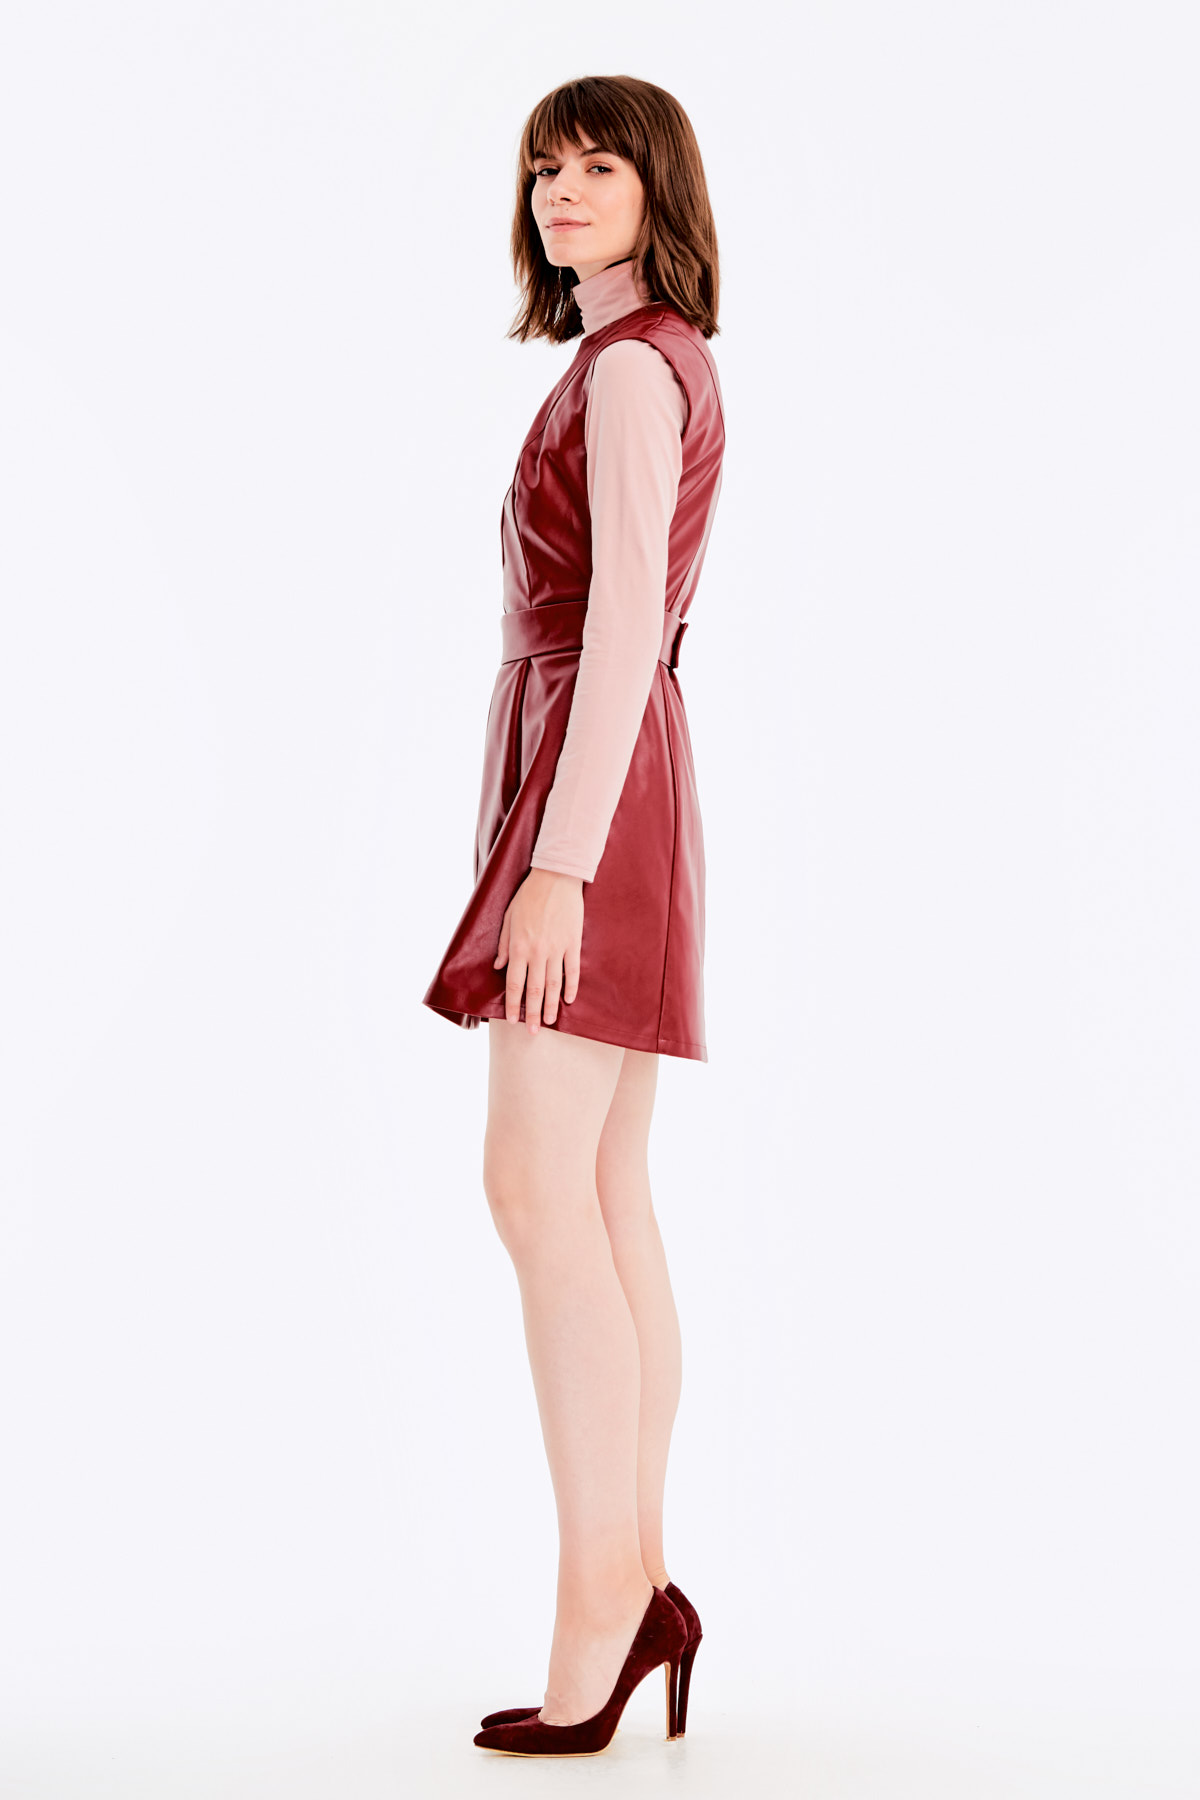 Below-knee burgundy leather dress , photo 4